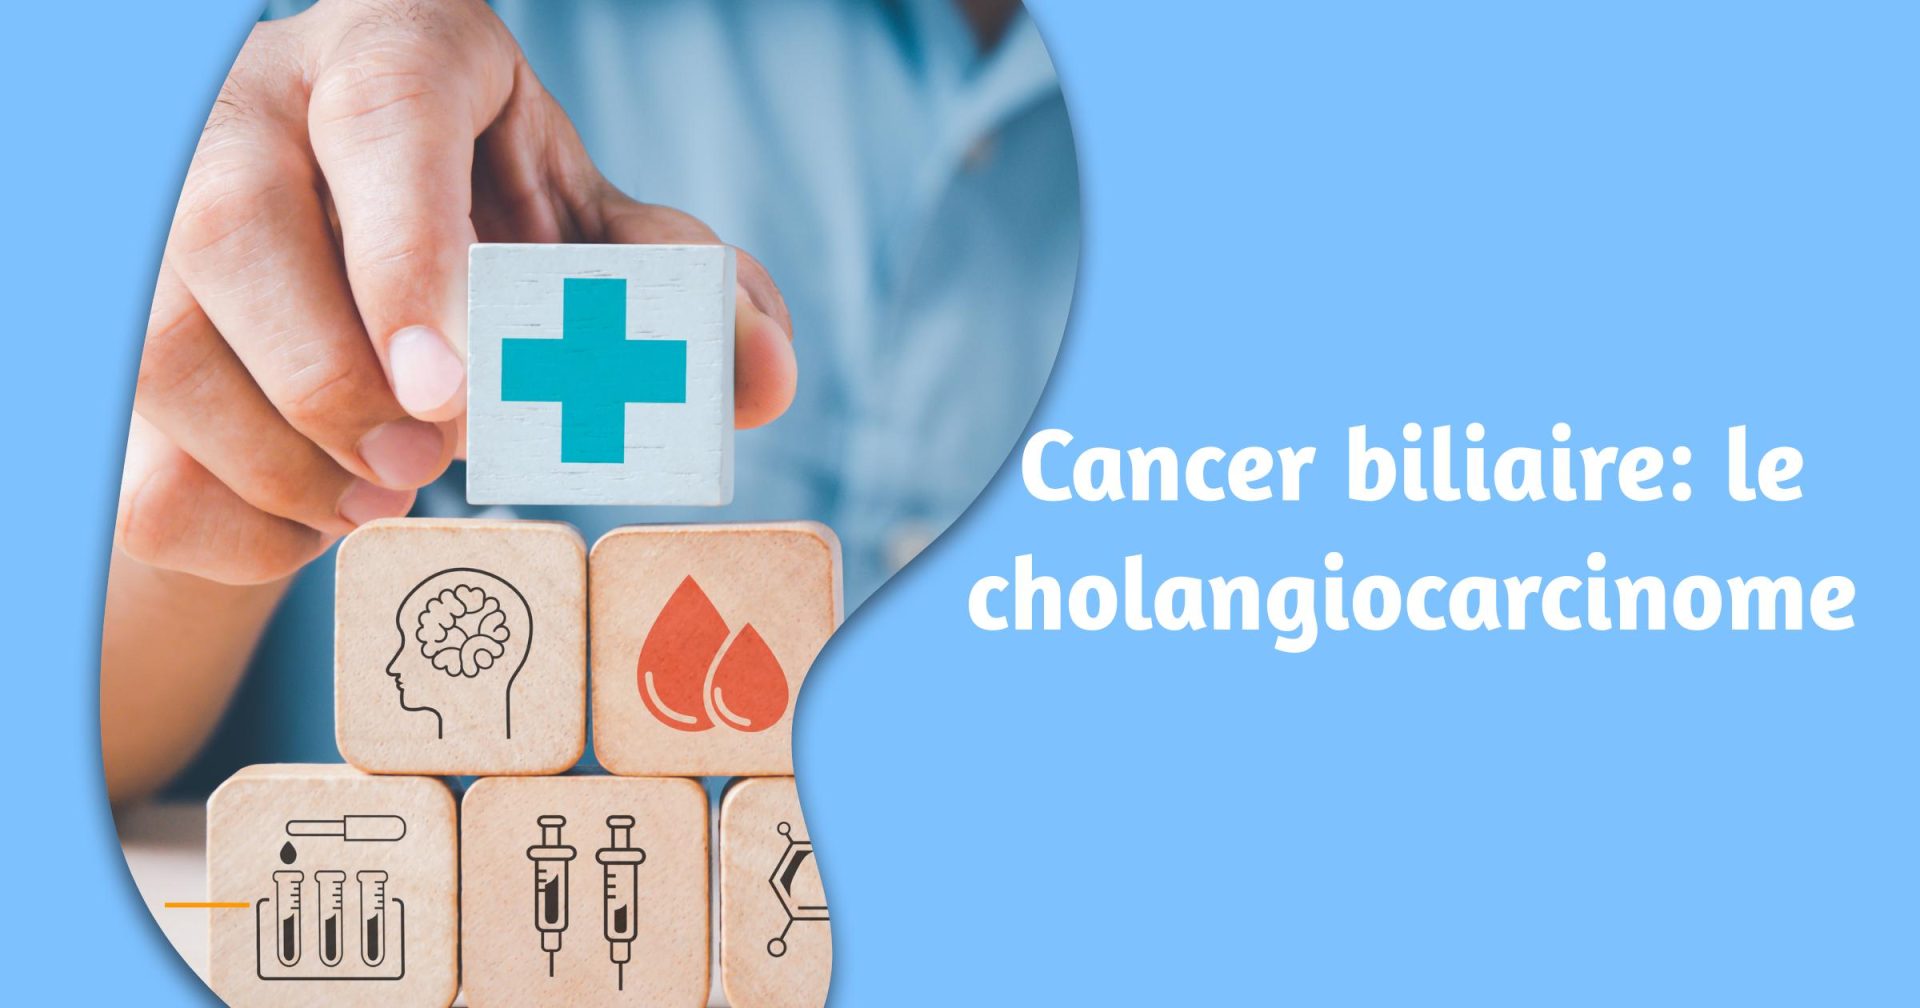 Cancer biliaire: le cholangiocarcinome